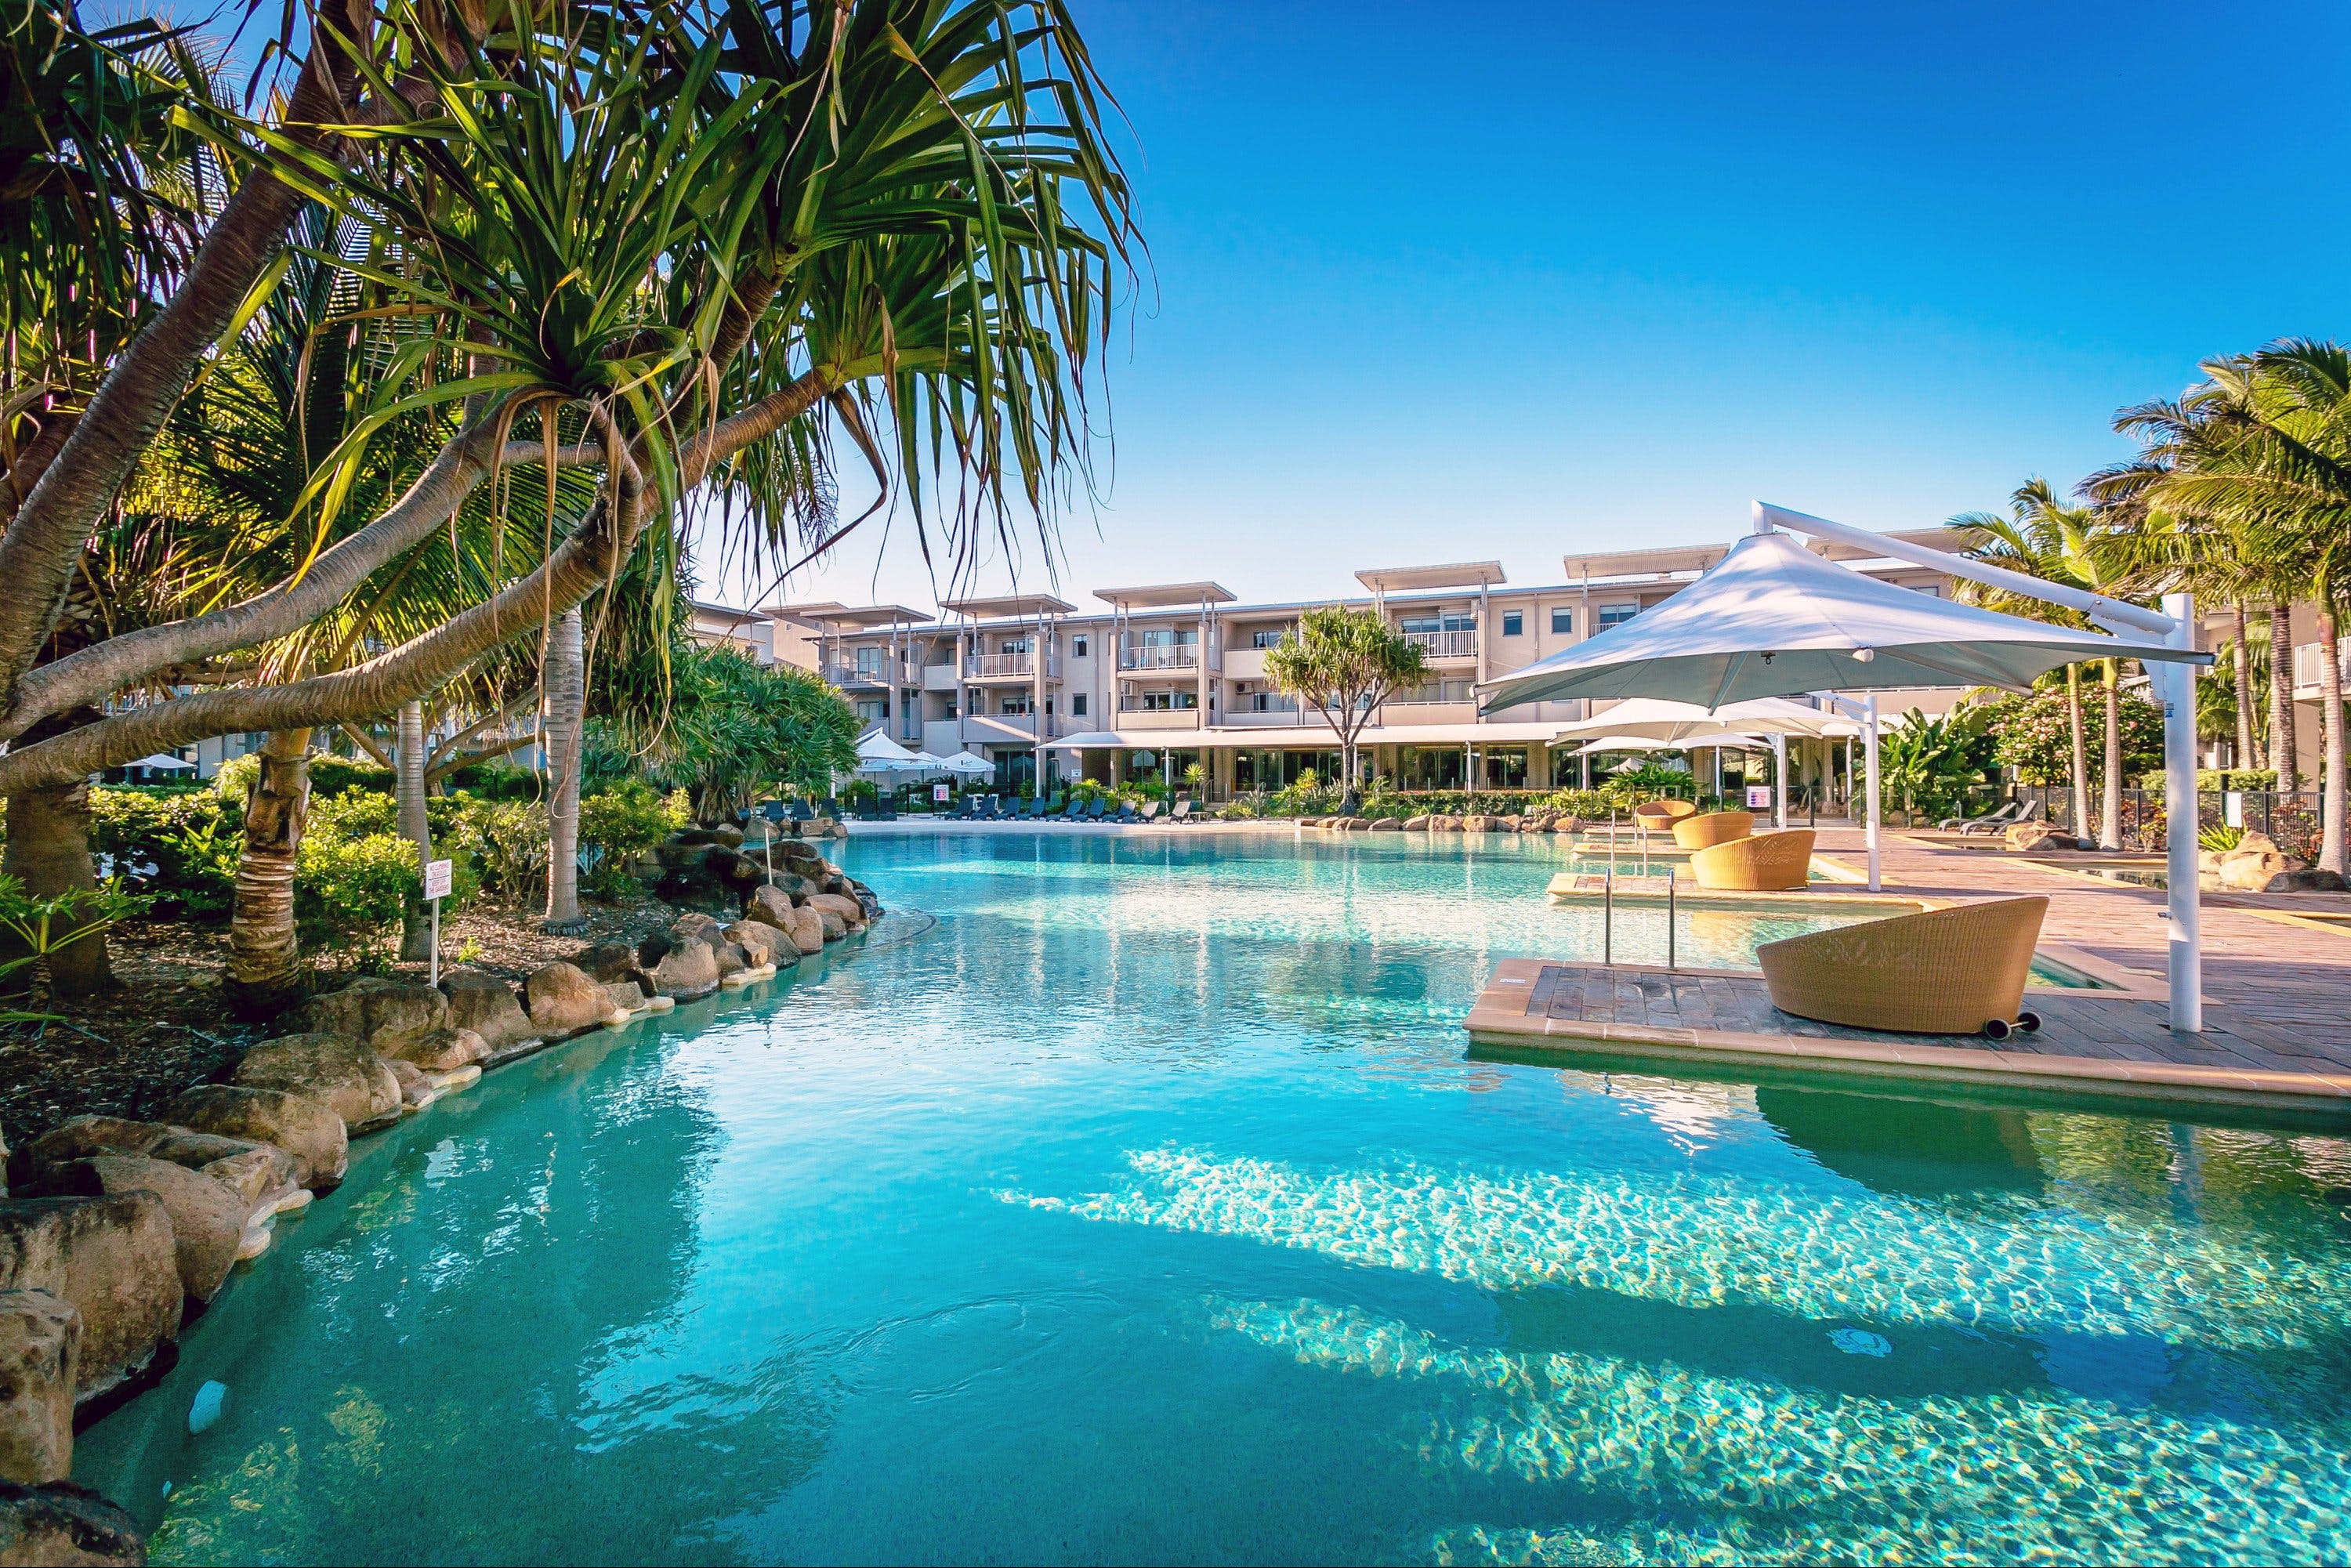 Peppers Salt Resort and Spa - Accommodation Sunshine Coast